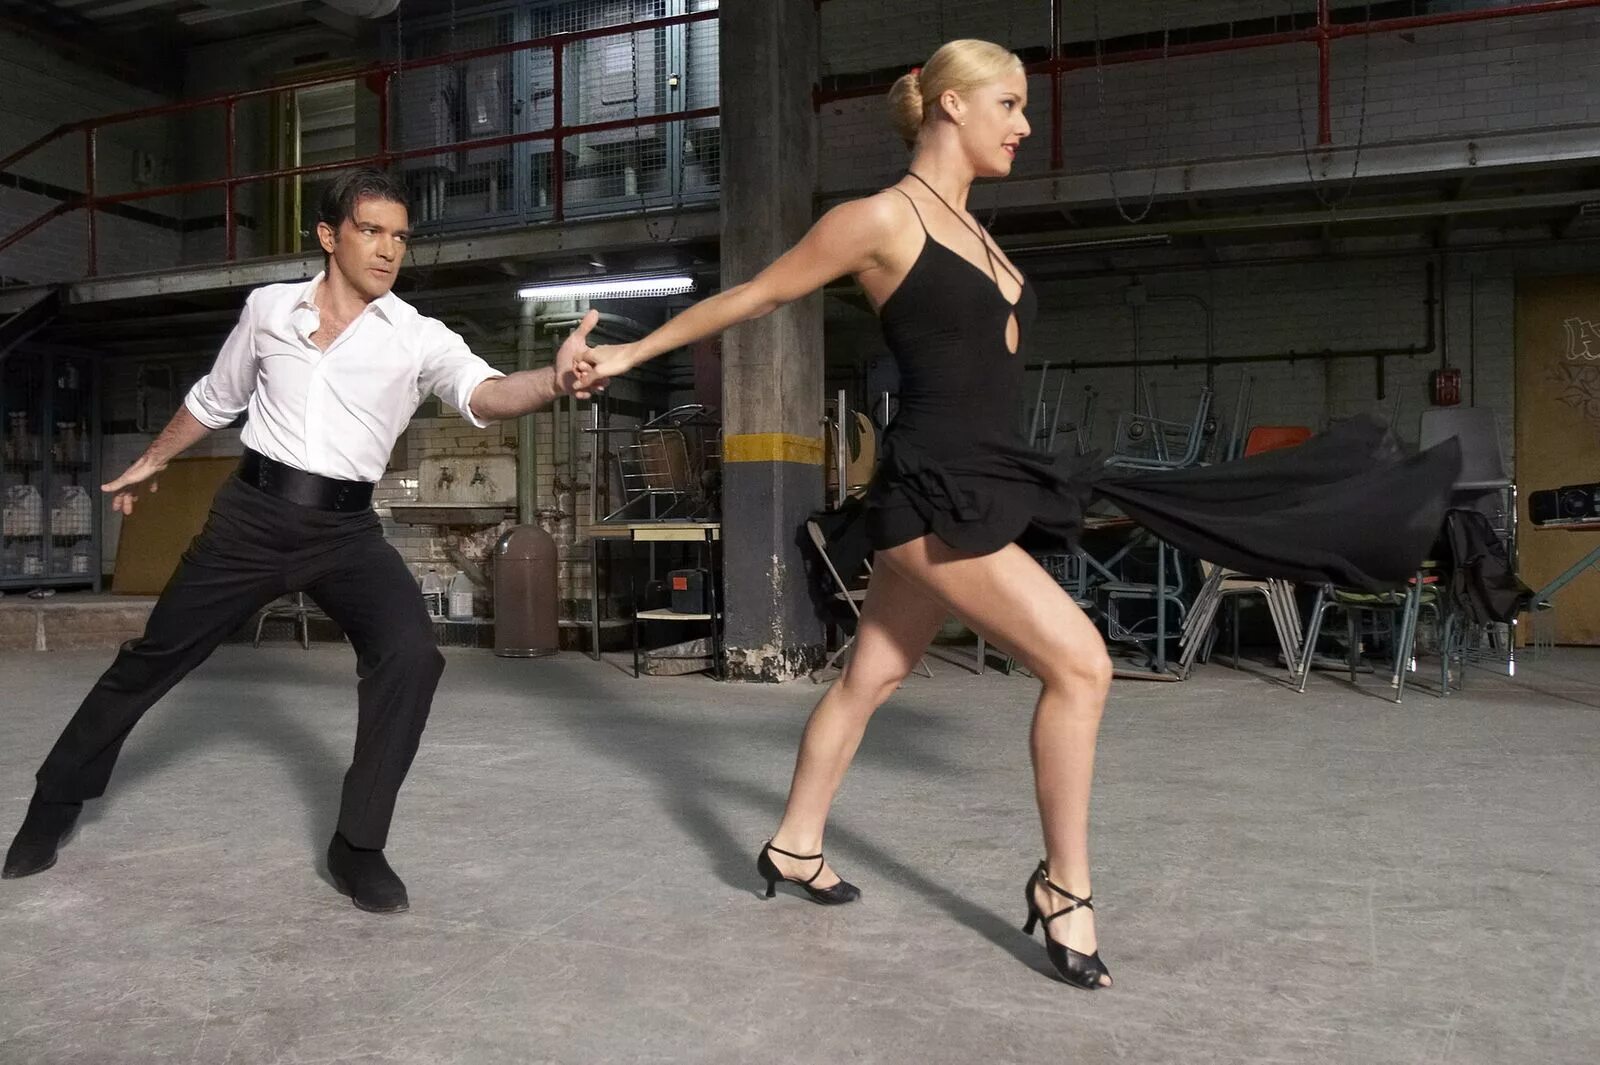 Танец где танцуют ногами. Антонио Бандерас держи ритм. Держи ритм фильм 2006. Танго Антонио Бандерас и Катя Виршилас. Танго Антонио Бандерас и Катя Виршилас в фильме держи ритм.